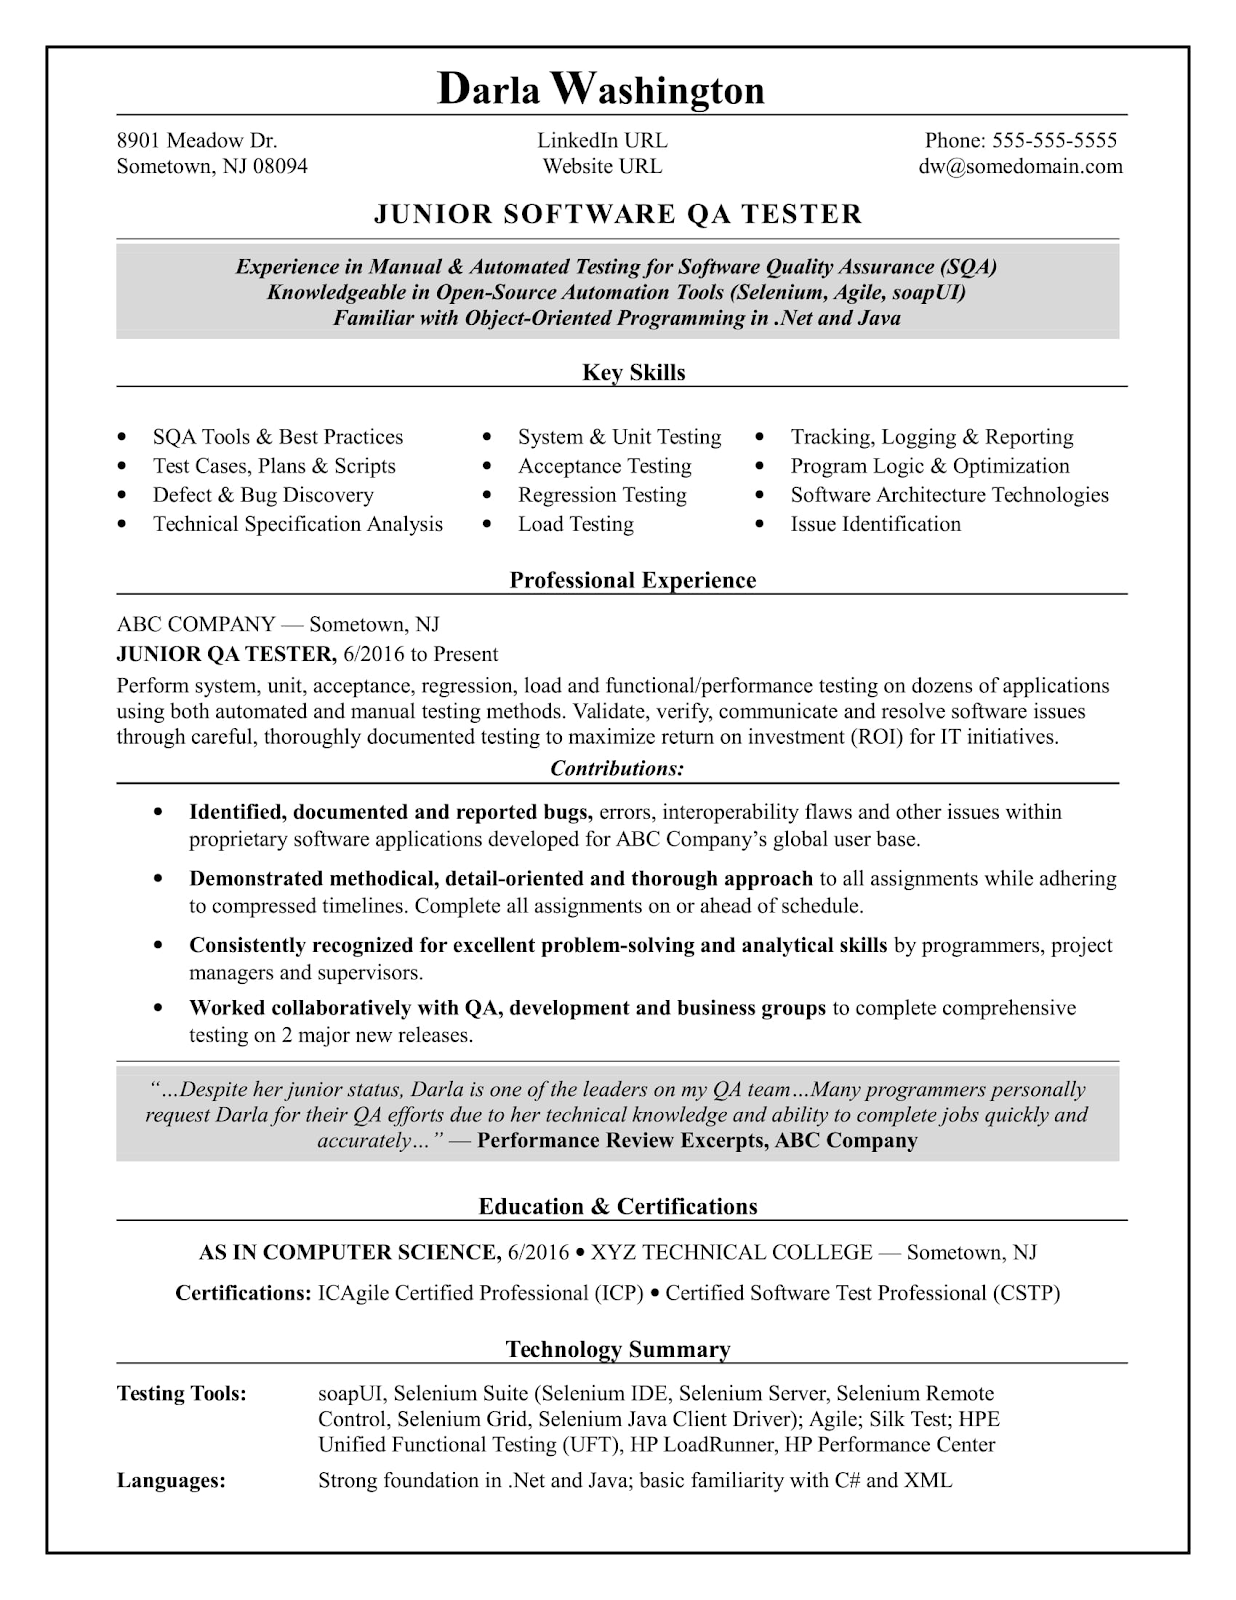 QA Tester Jobs Guide 2023 (Salaries, Careers, and Education) - The QA Lead